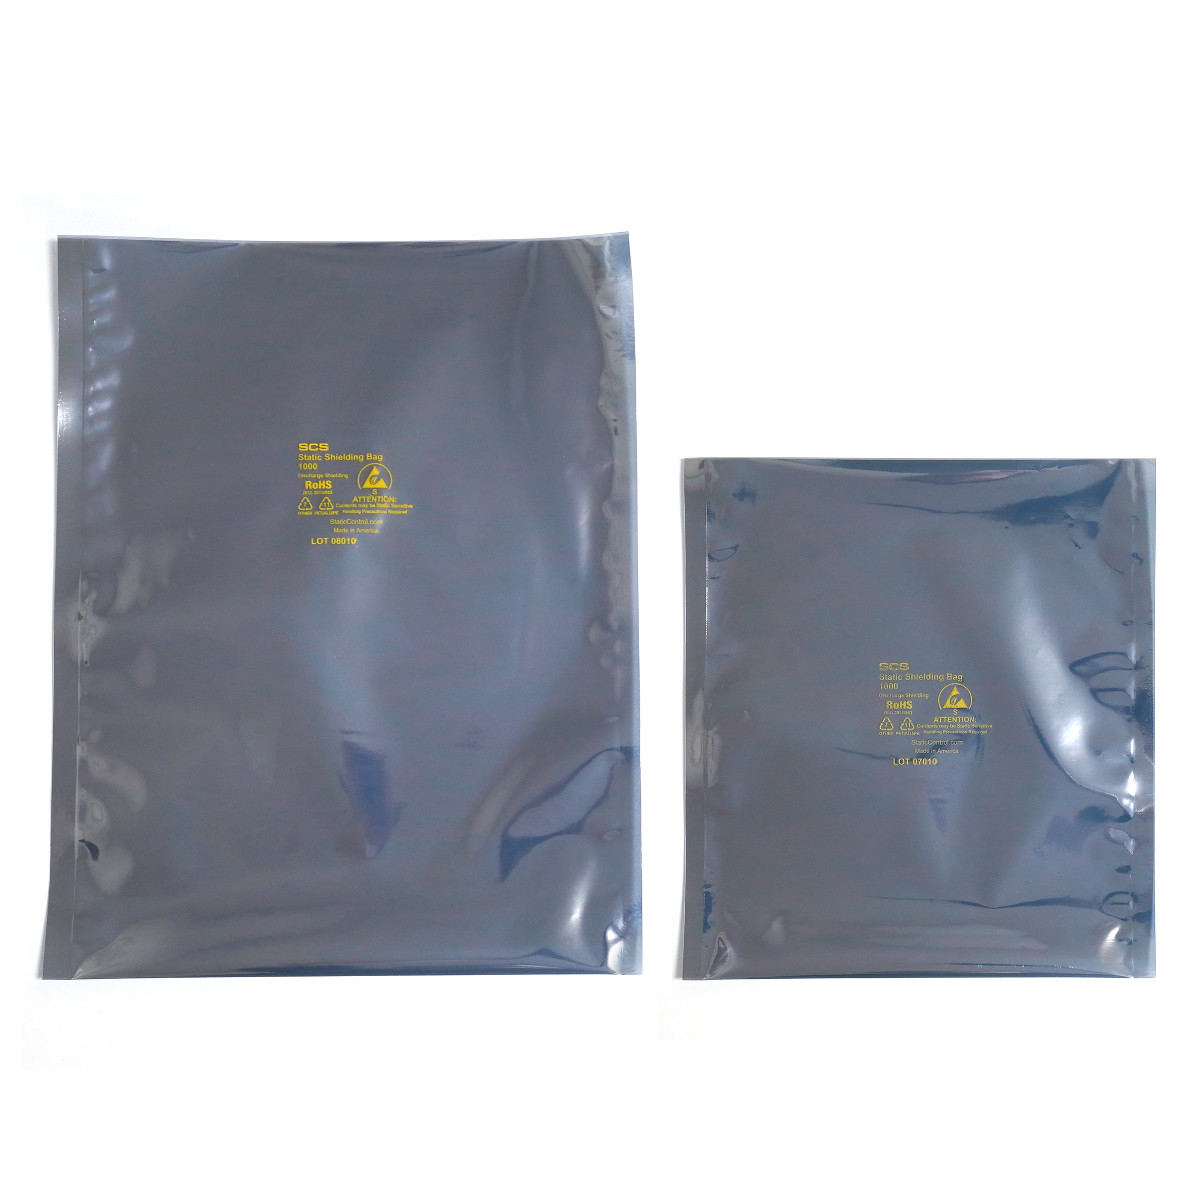 SCS 静電気防止袋(3層ラミネートタイプ) SSB / SCS Antistatic Bag (3 layer laminated  type) SSB / アーケードゲーム販売トップス